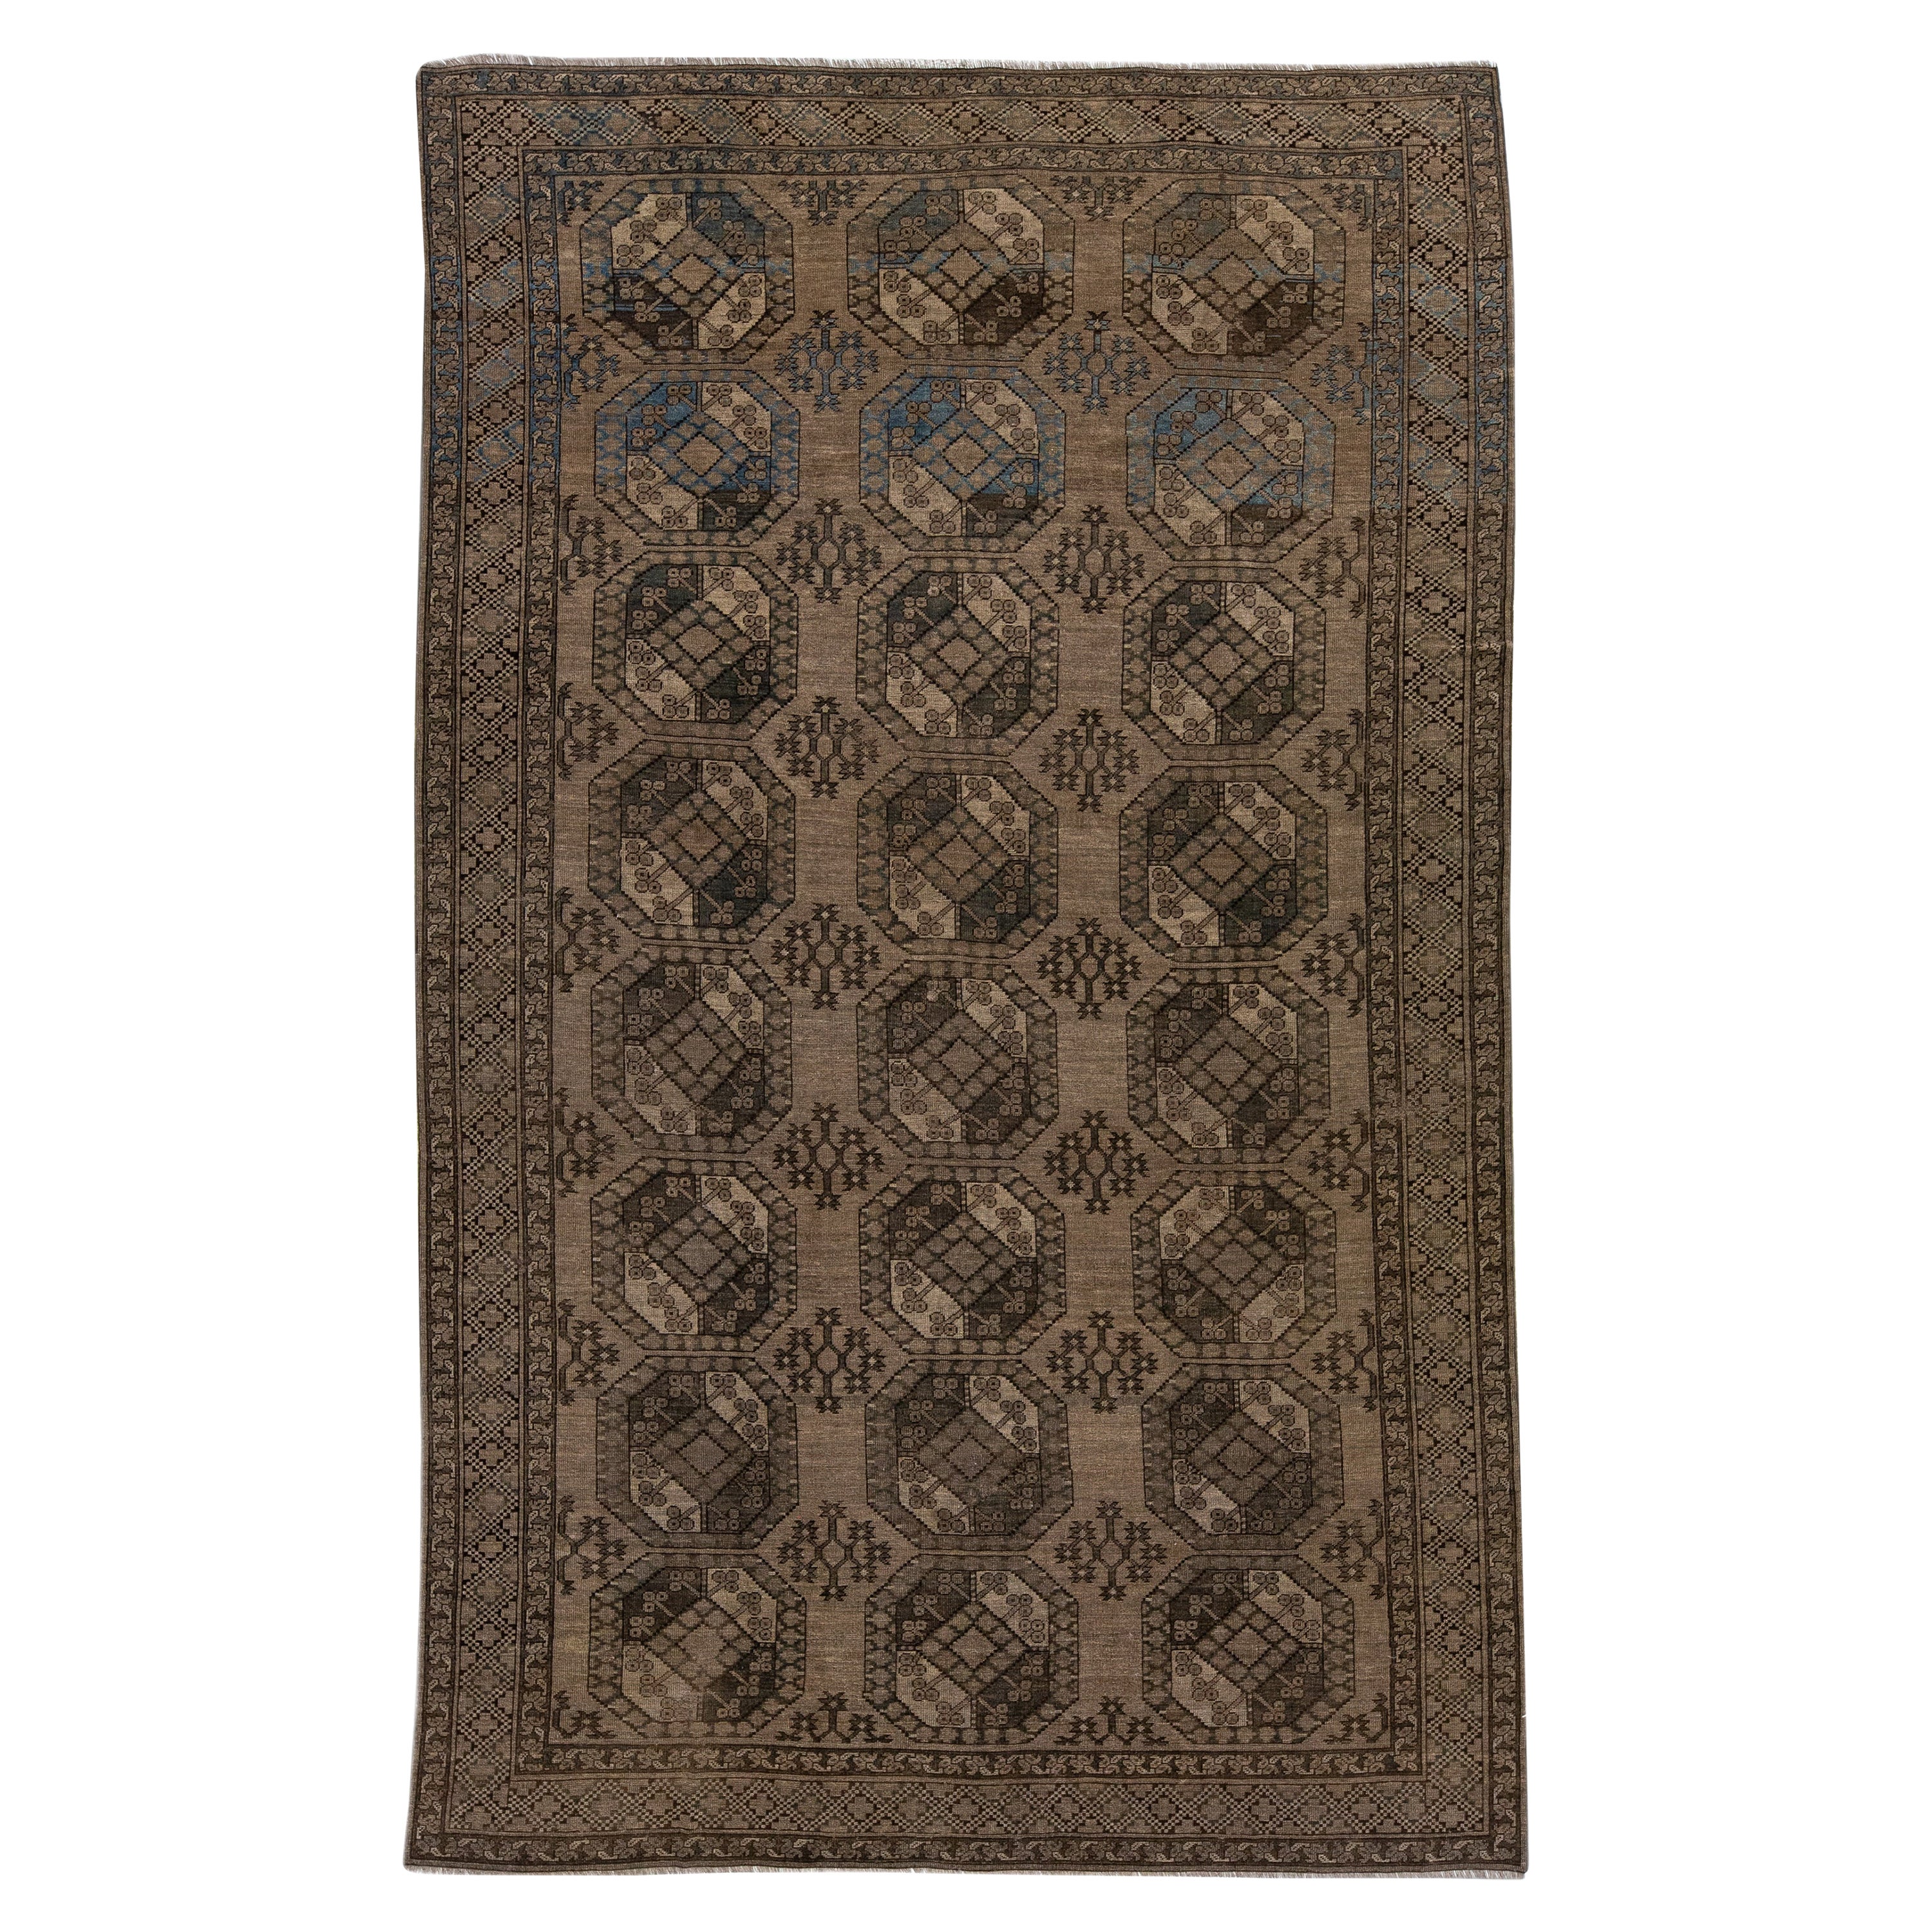 Antique Turkmen Handmade Wool Brown Rug with Gul Design For Sale